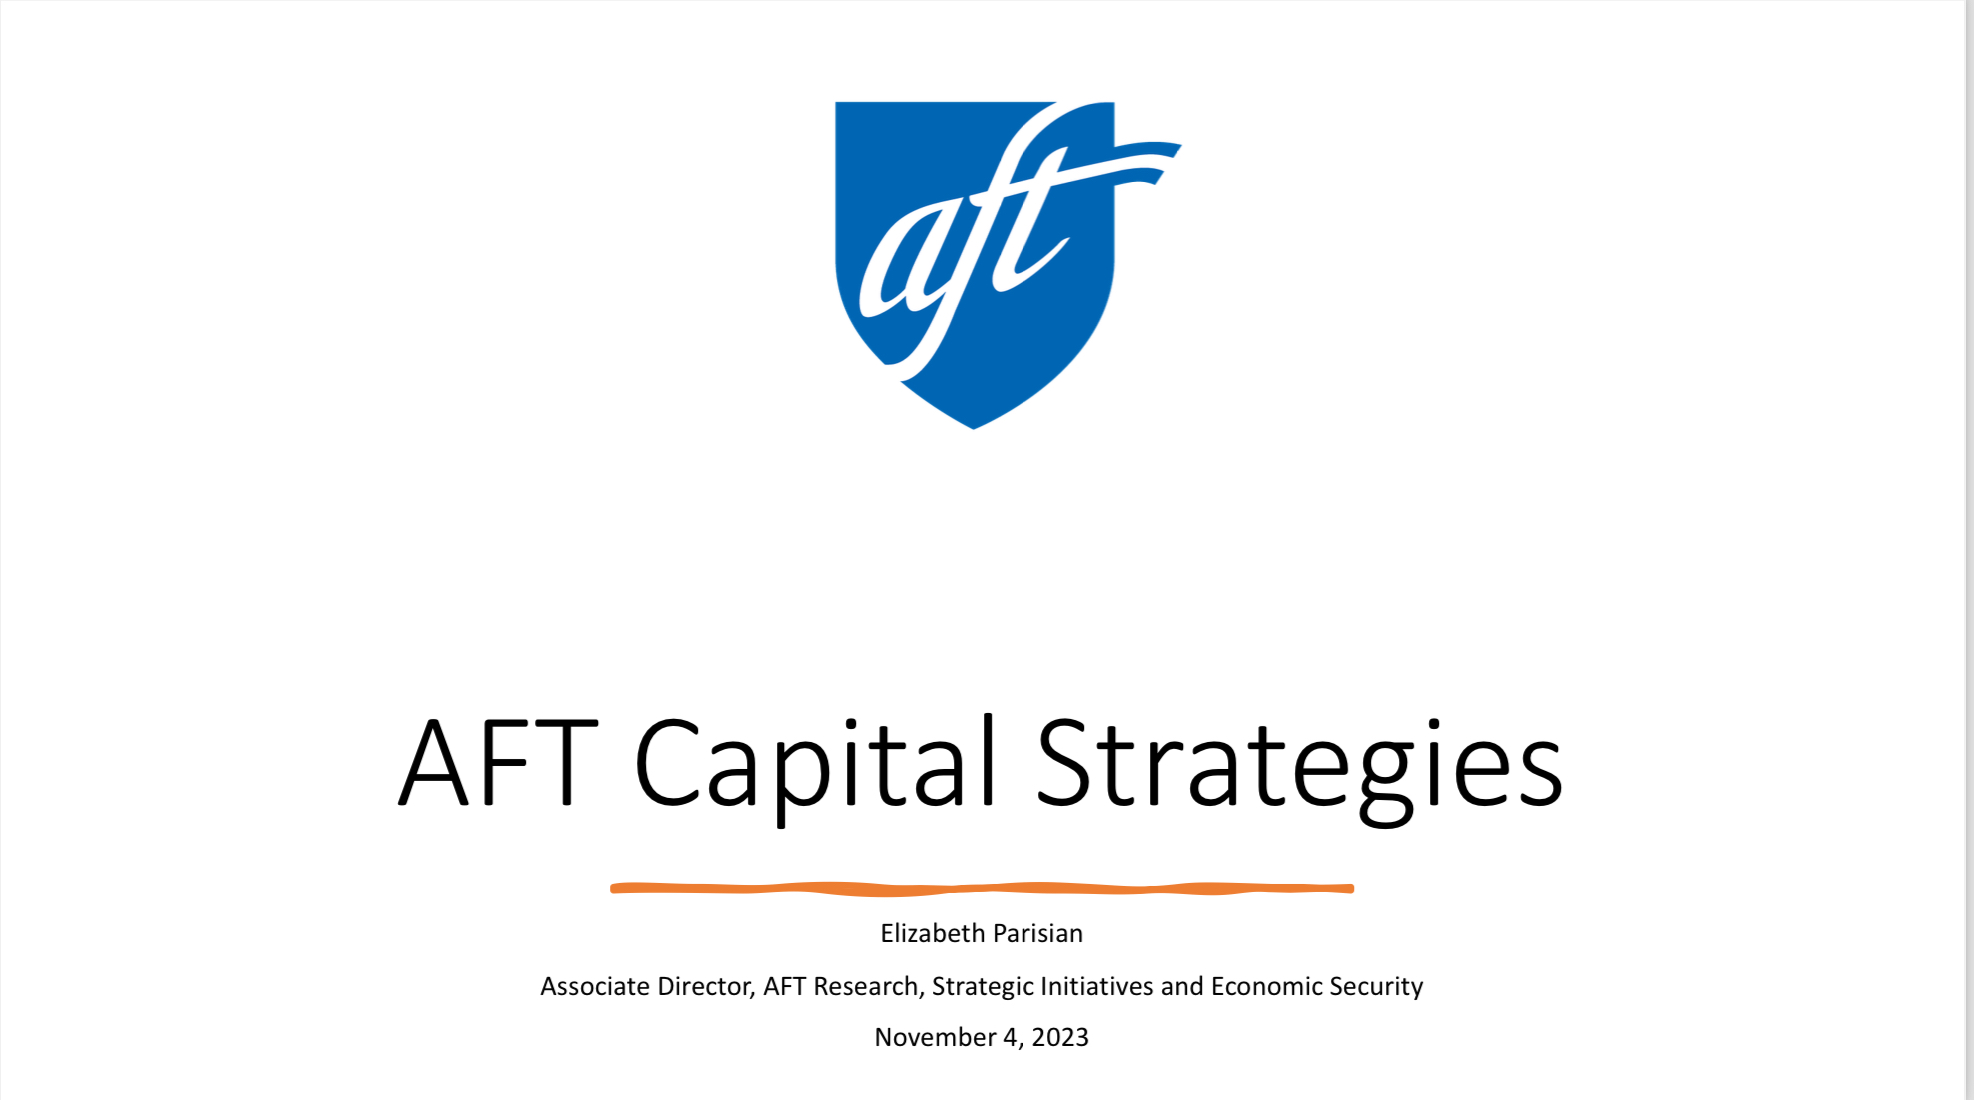 AFT Capital Stragies